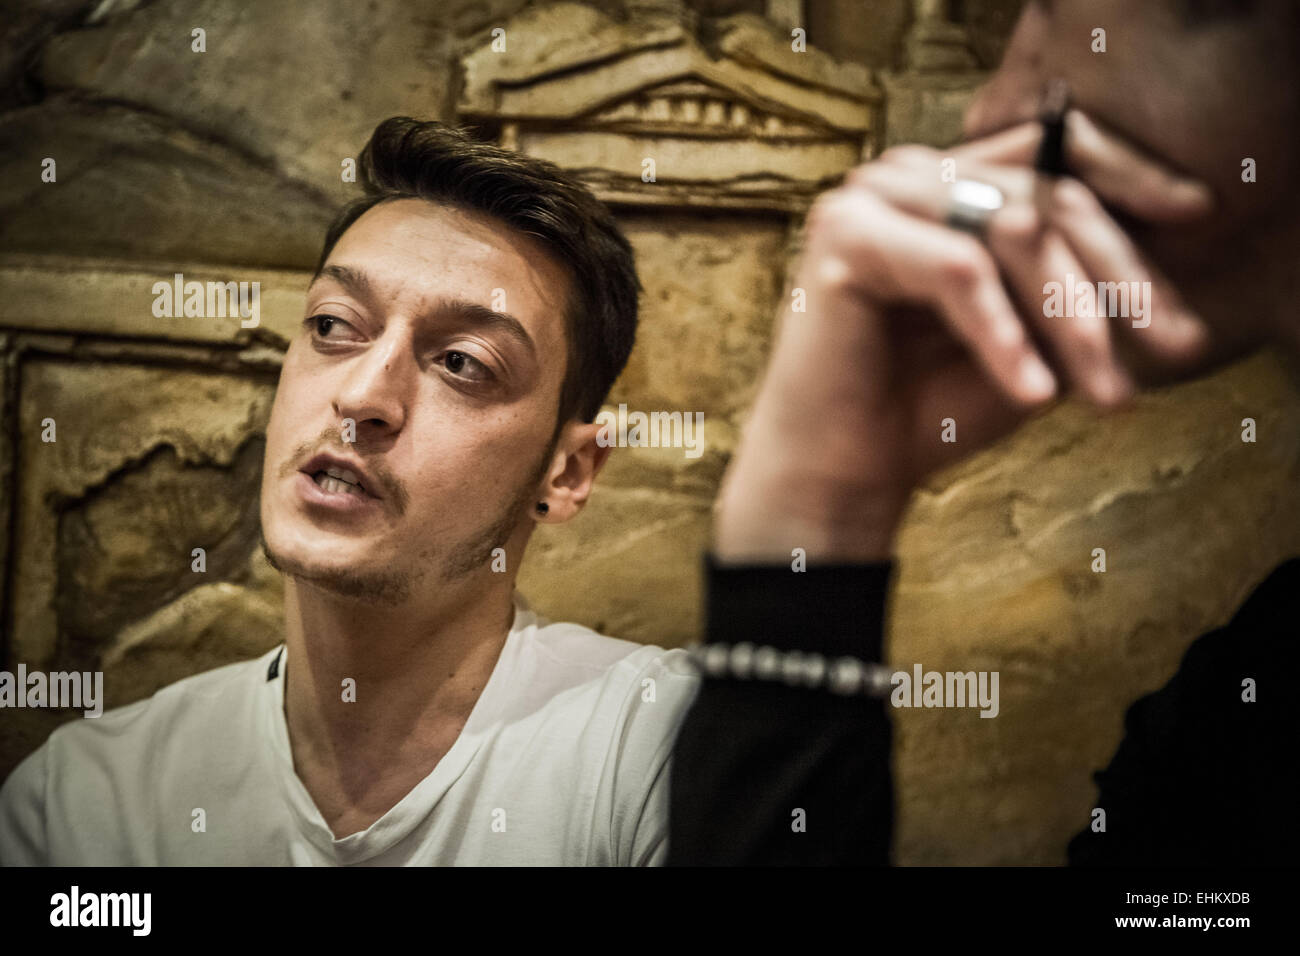 Mesut Özil, German footballer and Arsenal player gives an interview Stock Photo